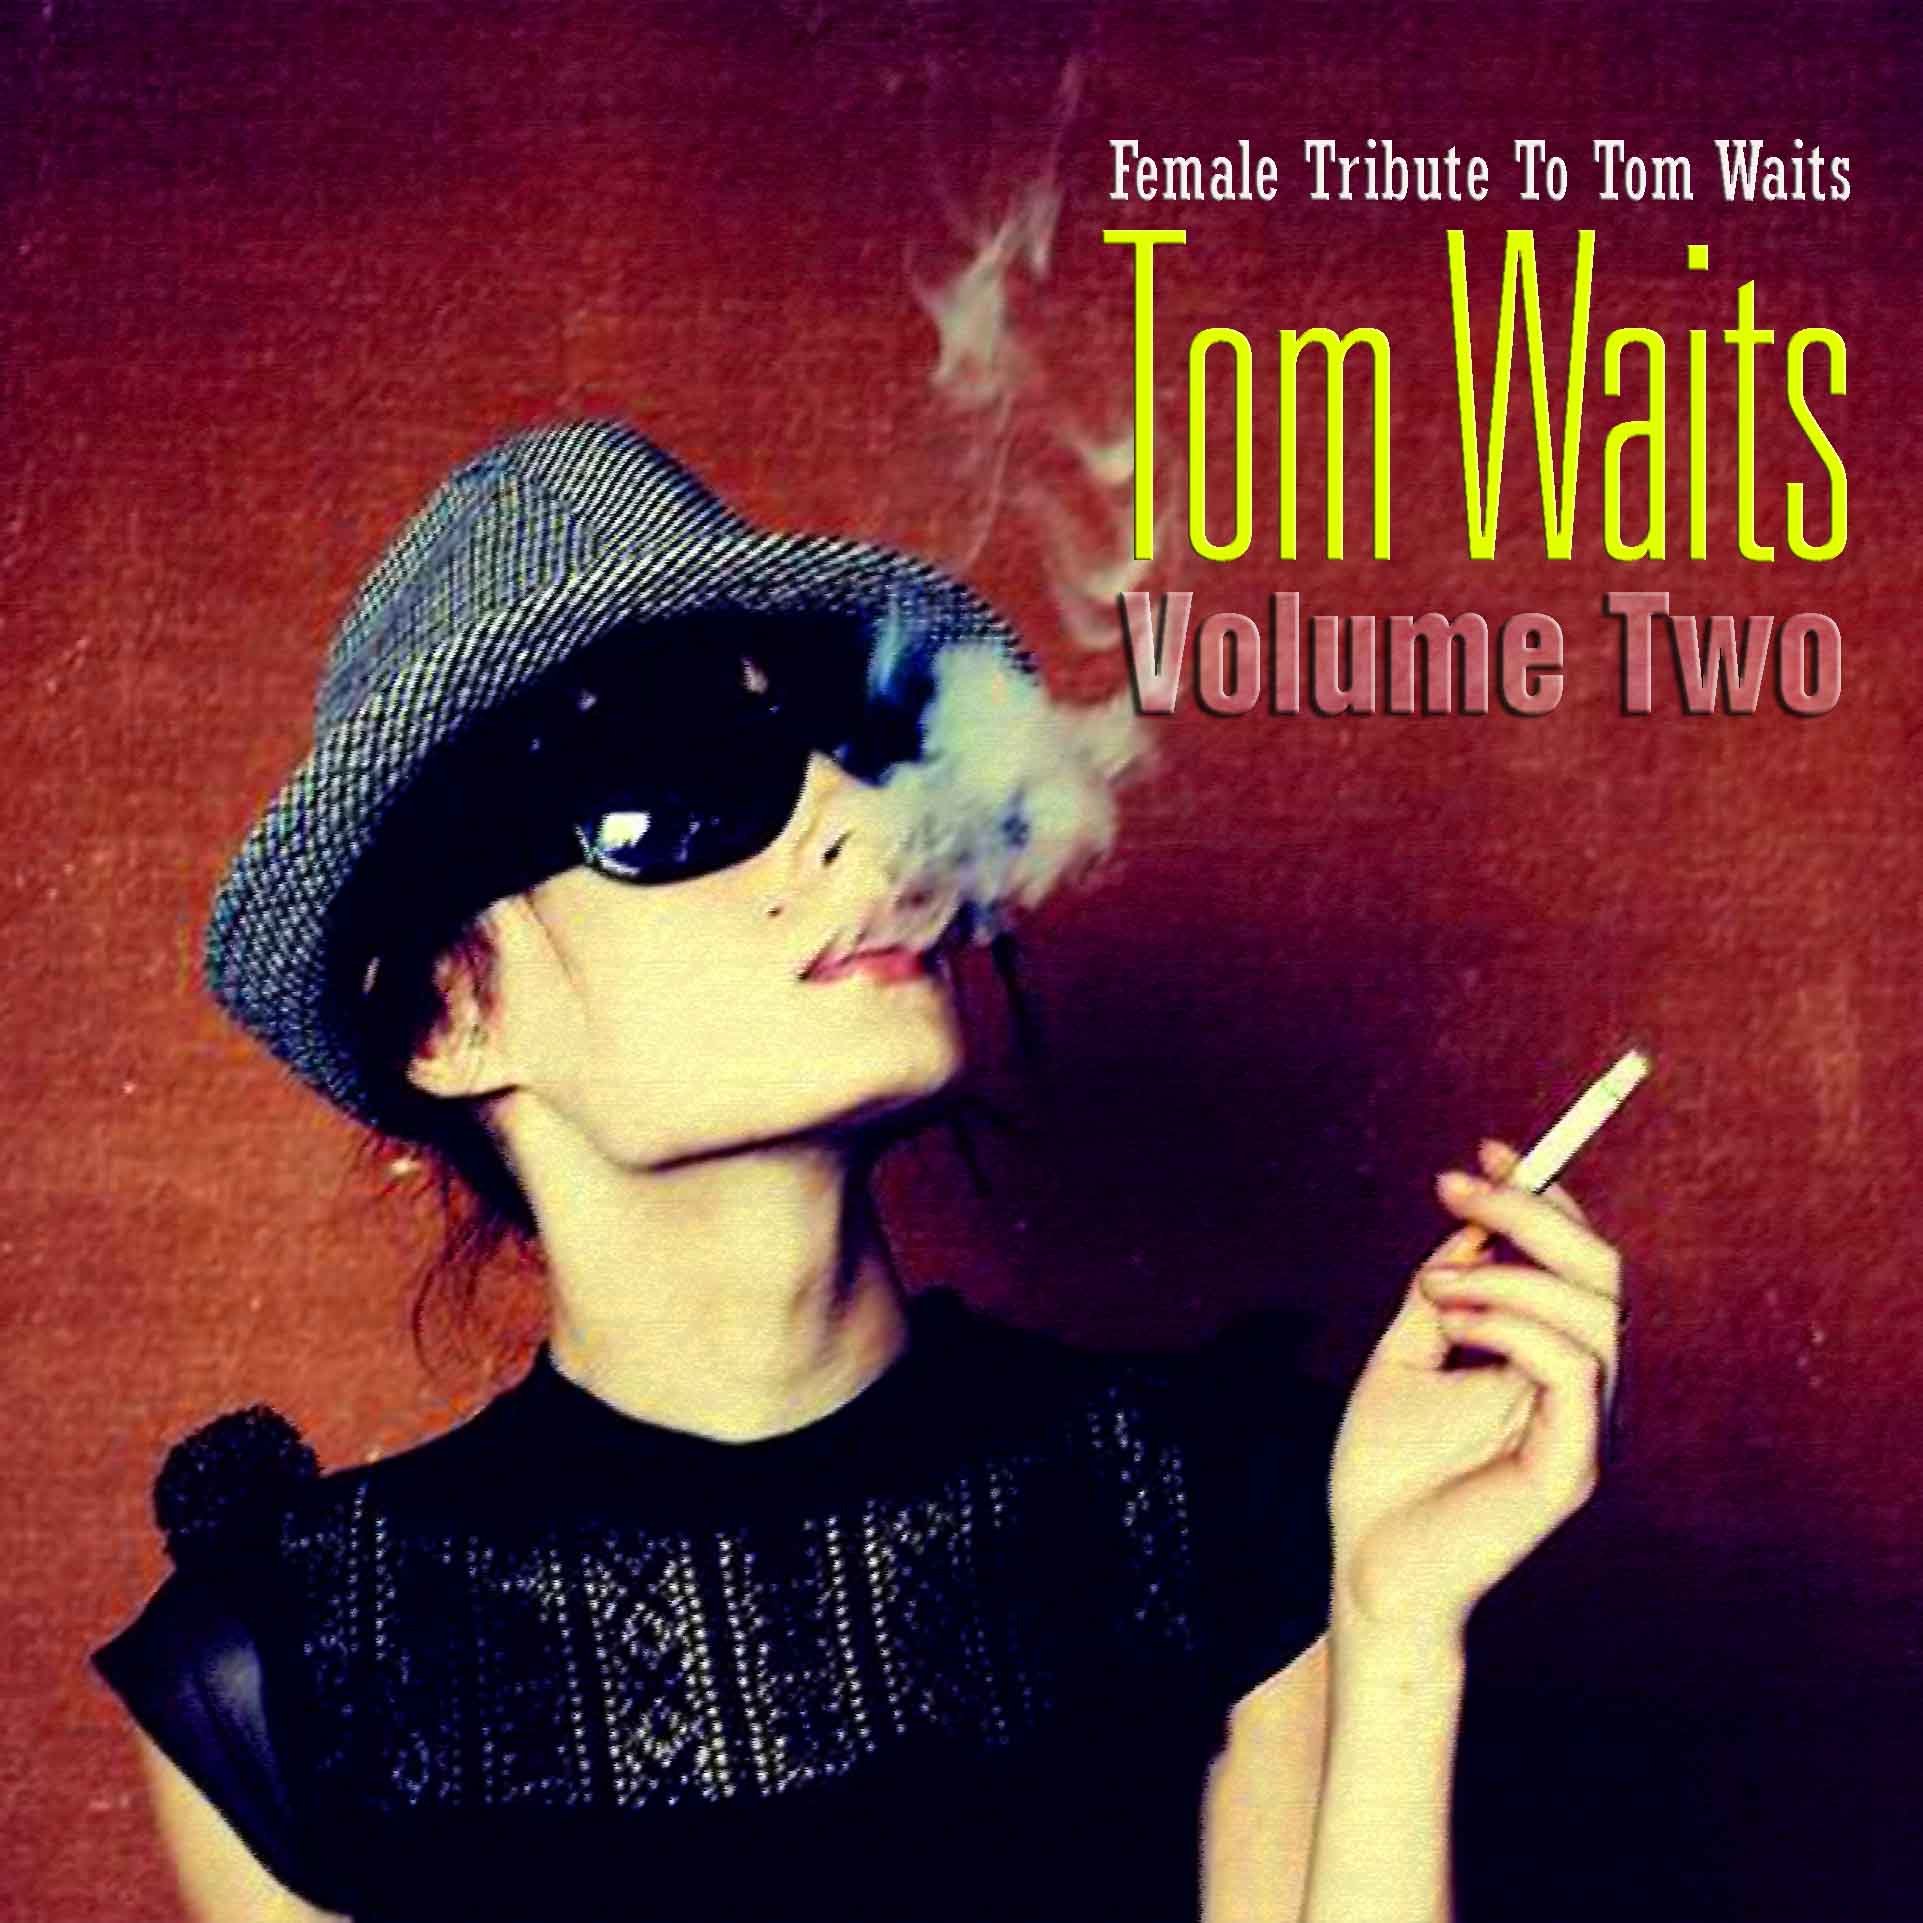 Similar artists - Female Tribute To Tom Waits - Vol.2 CD2 (2008) Last.fm.